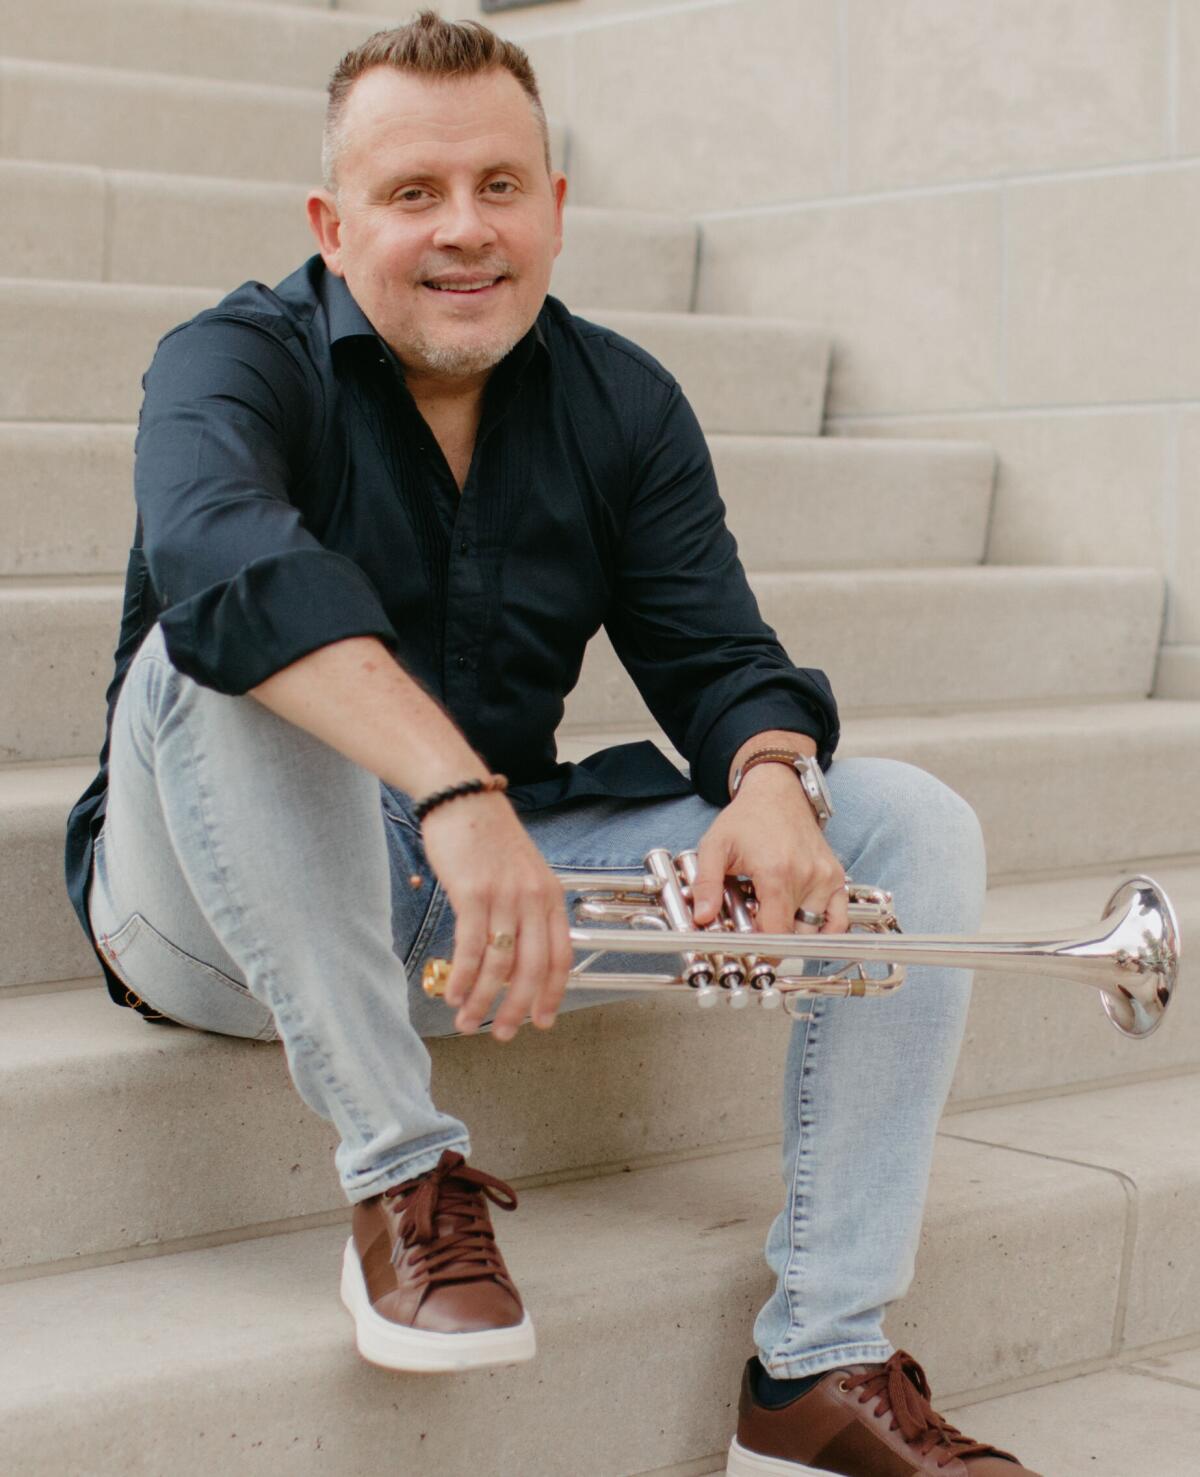 Trumpet player José Sibaja will perform as part of the "Latin Fire" concert next weekend.